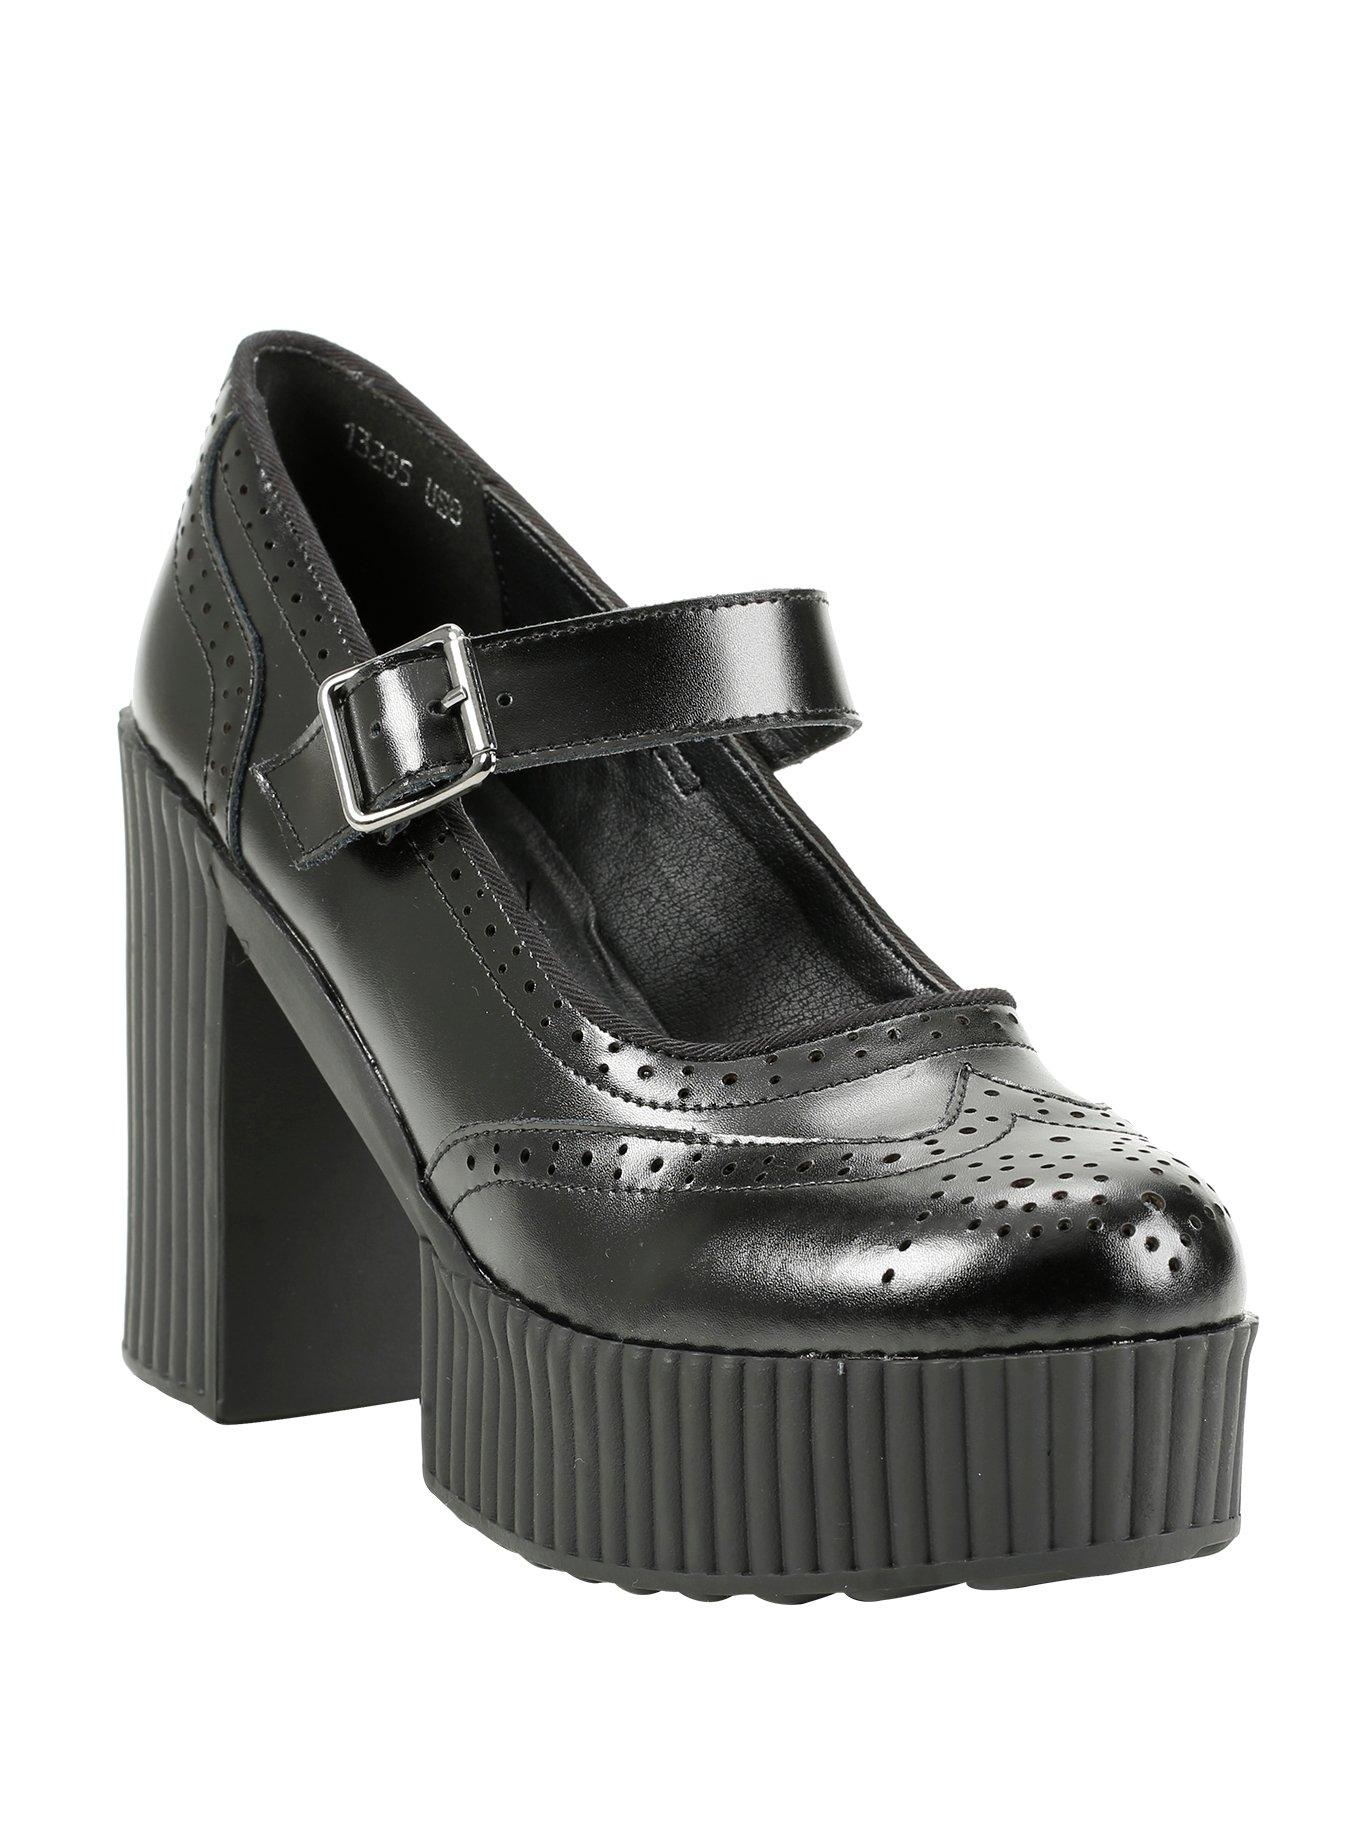 T.U.K. Black Leather Wingtip Mary Jane Heel, BLACK, hi-res